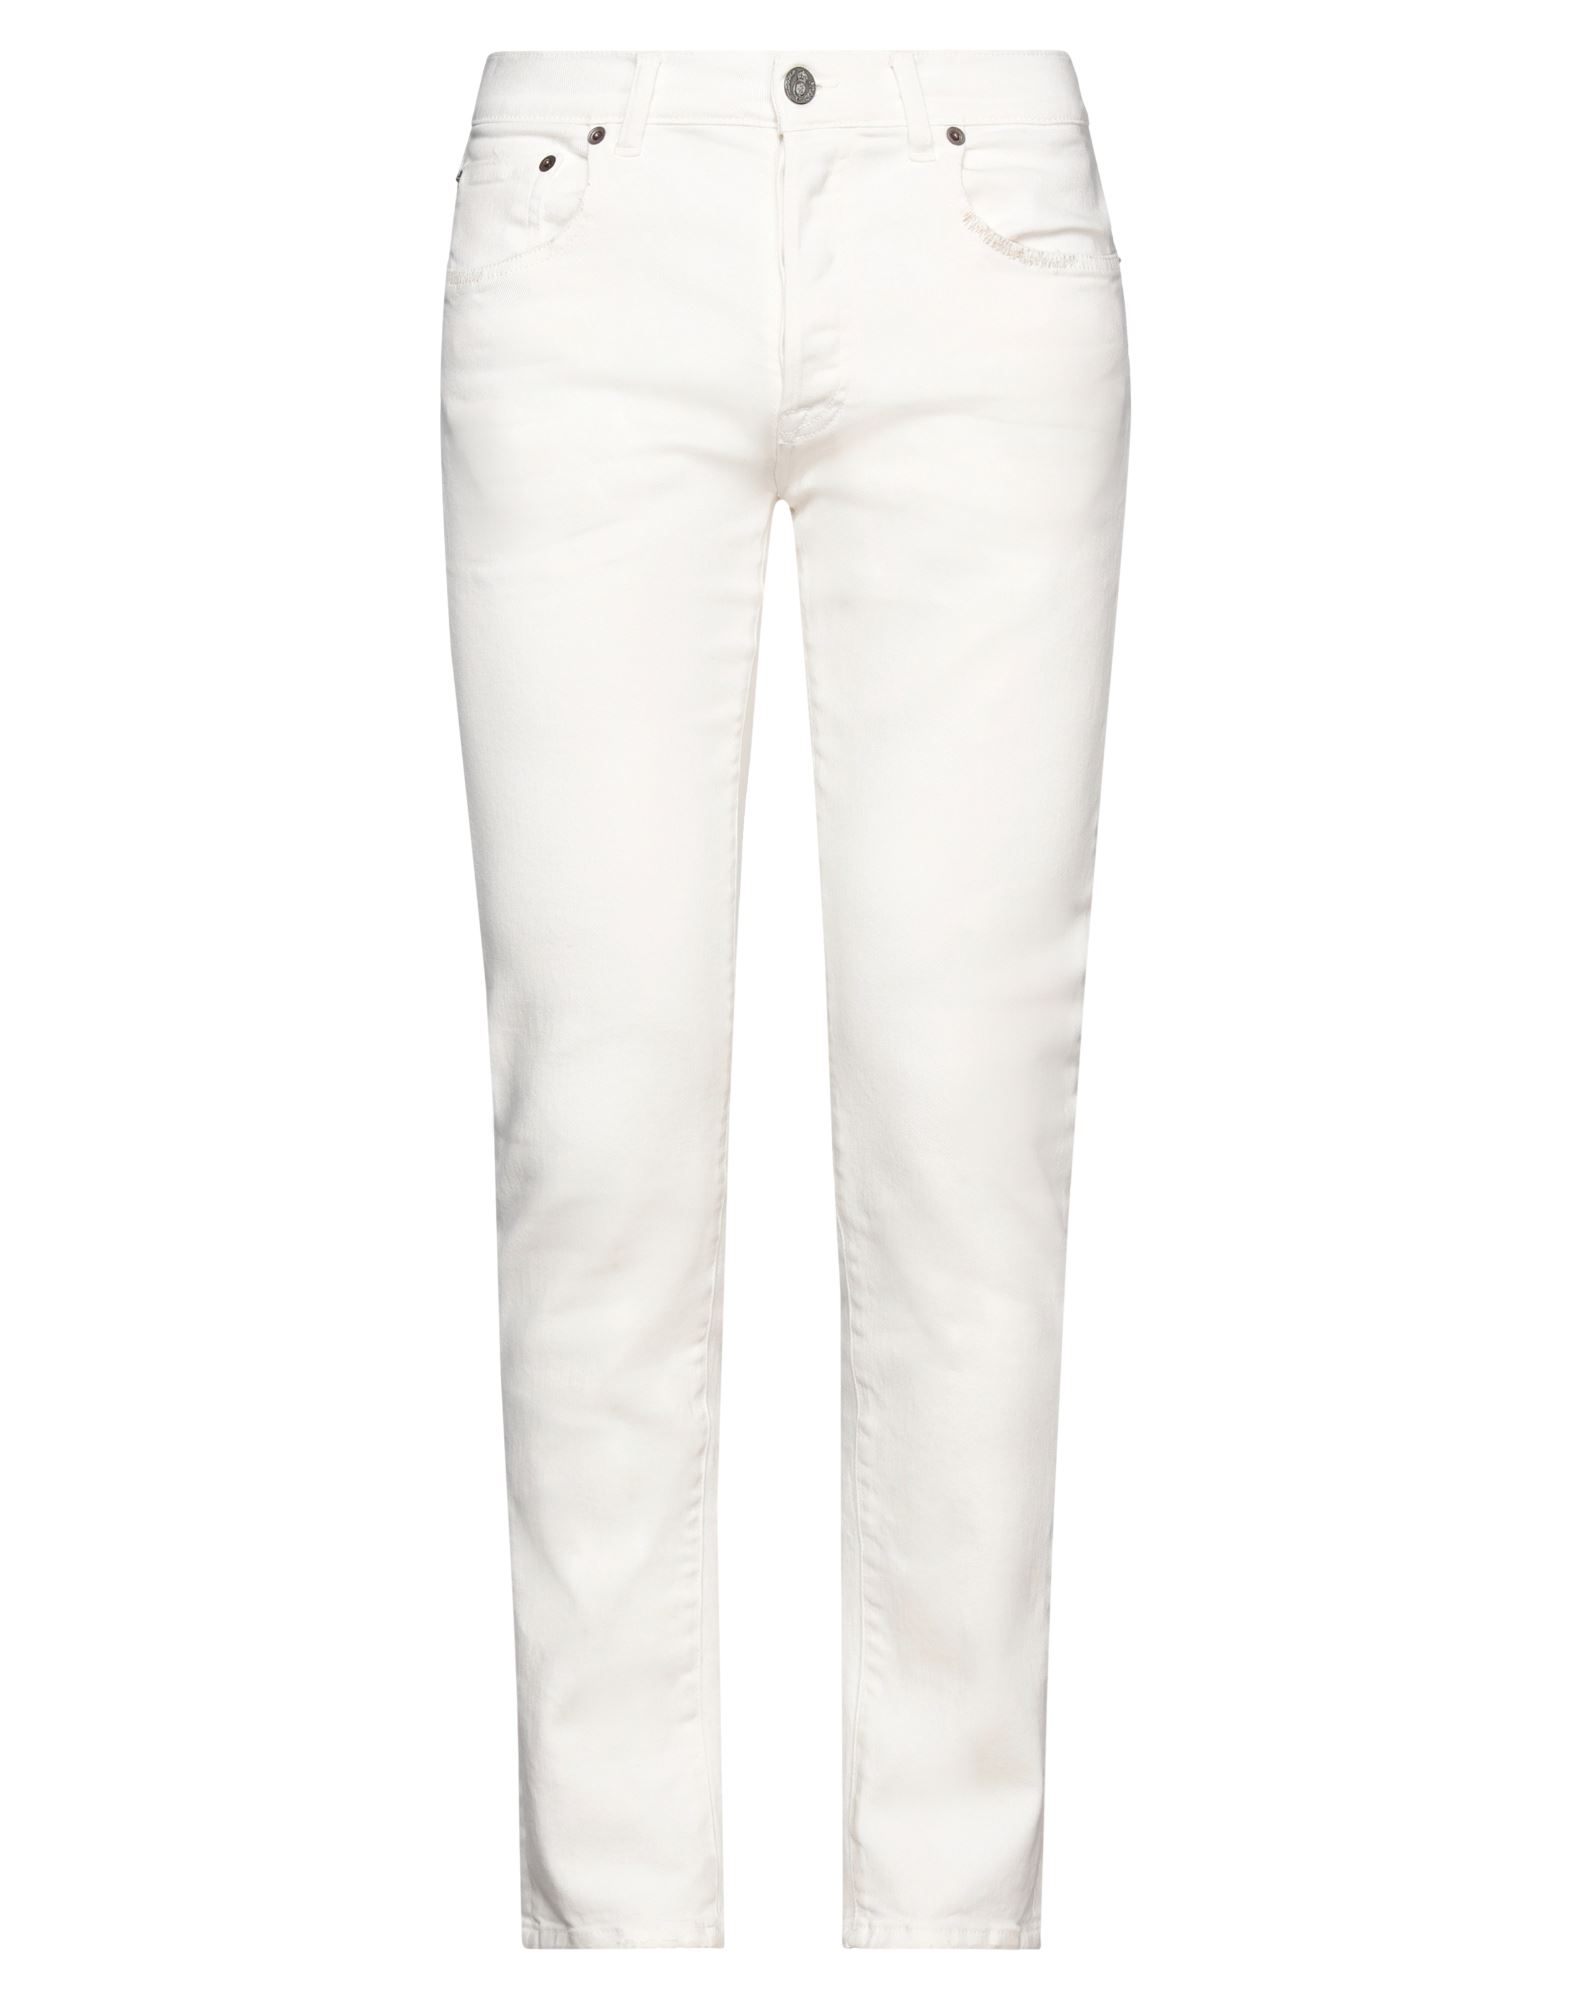 Pmds Premium Mood Denim Superior Man Jeans White Size 28w-32l Cotton, Elastane